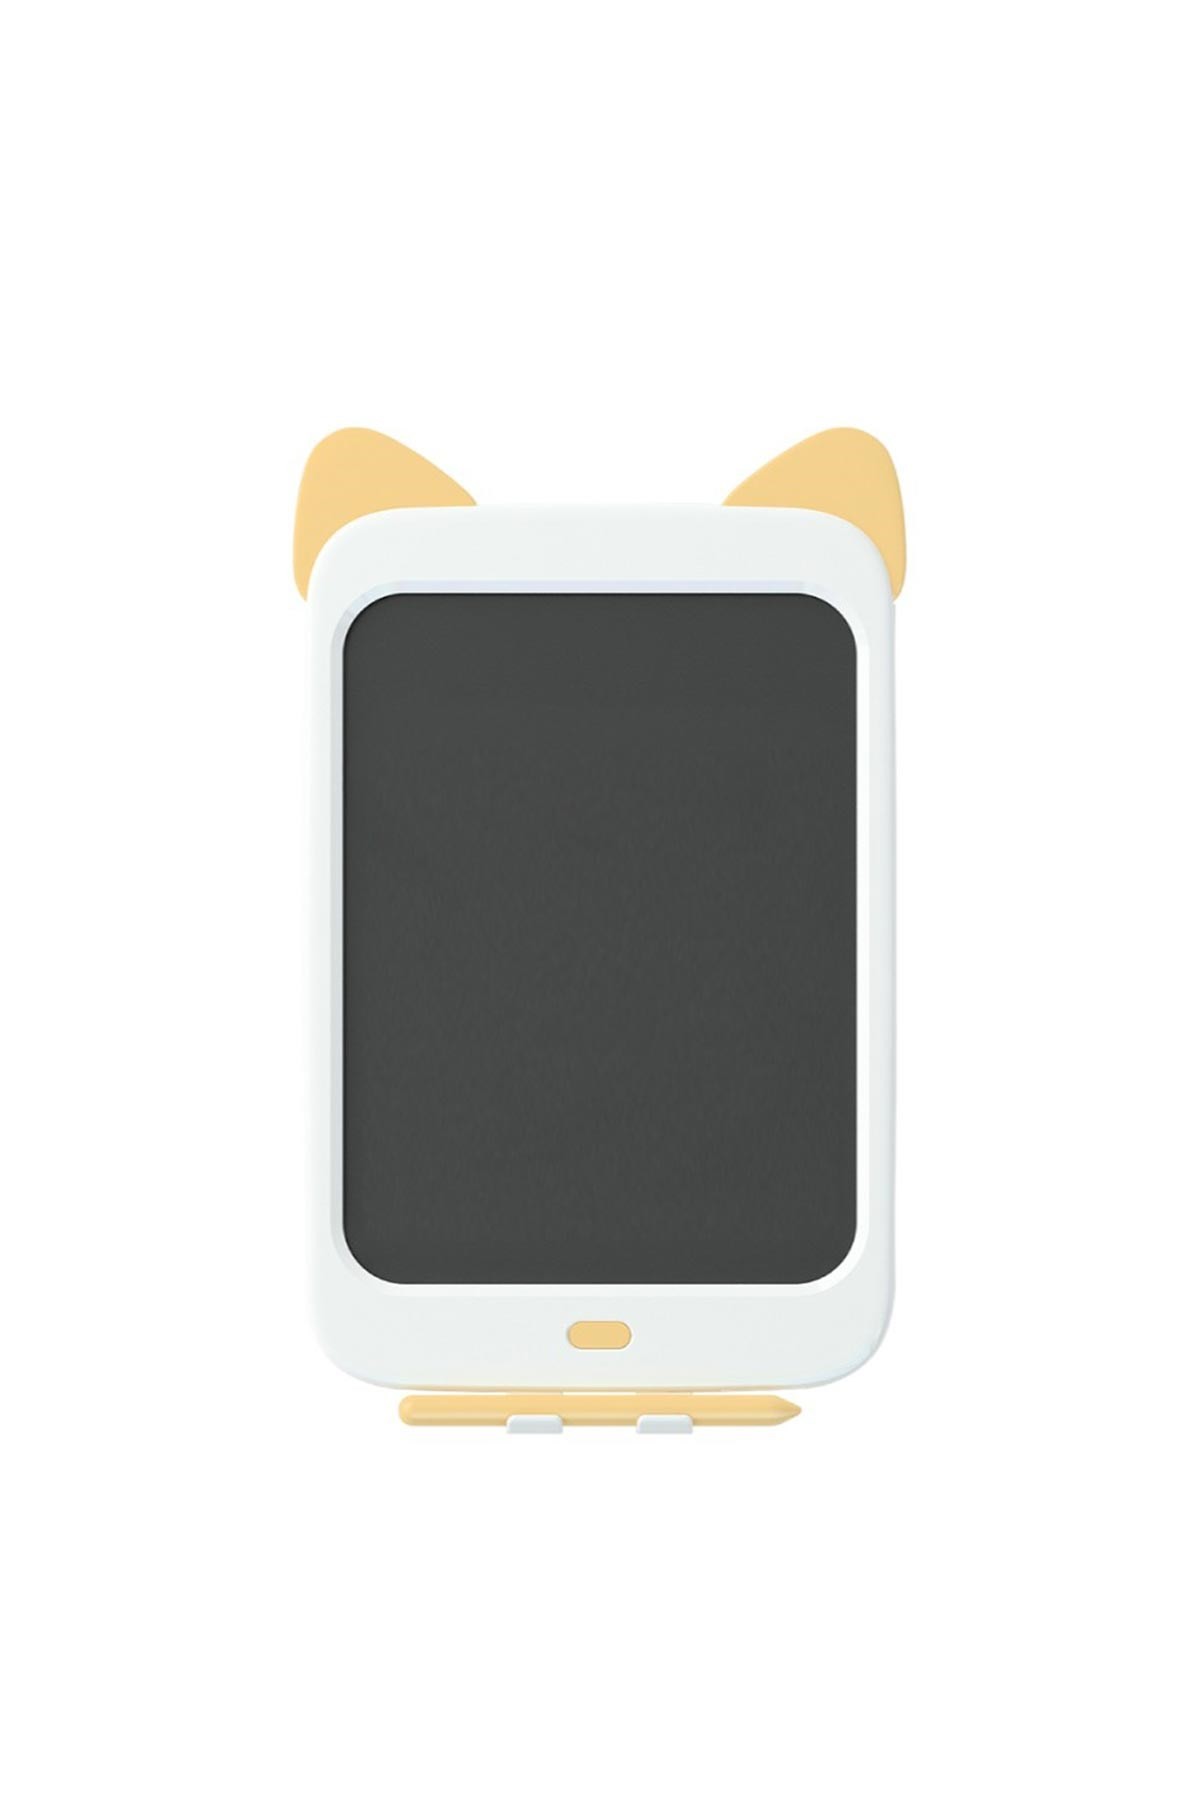 Xiaomi Wicue 10 Inç Sarı Kedi LCD Dijital Renkli Çizim Tableti Beyaz